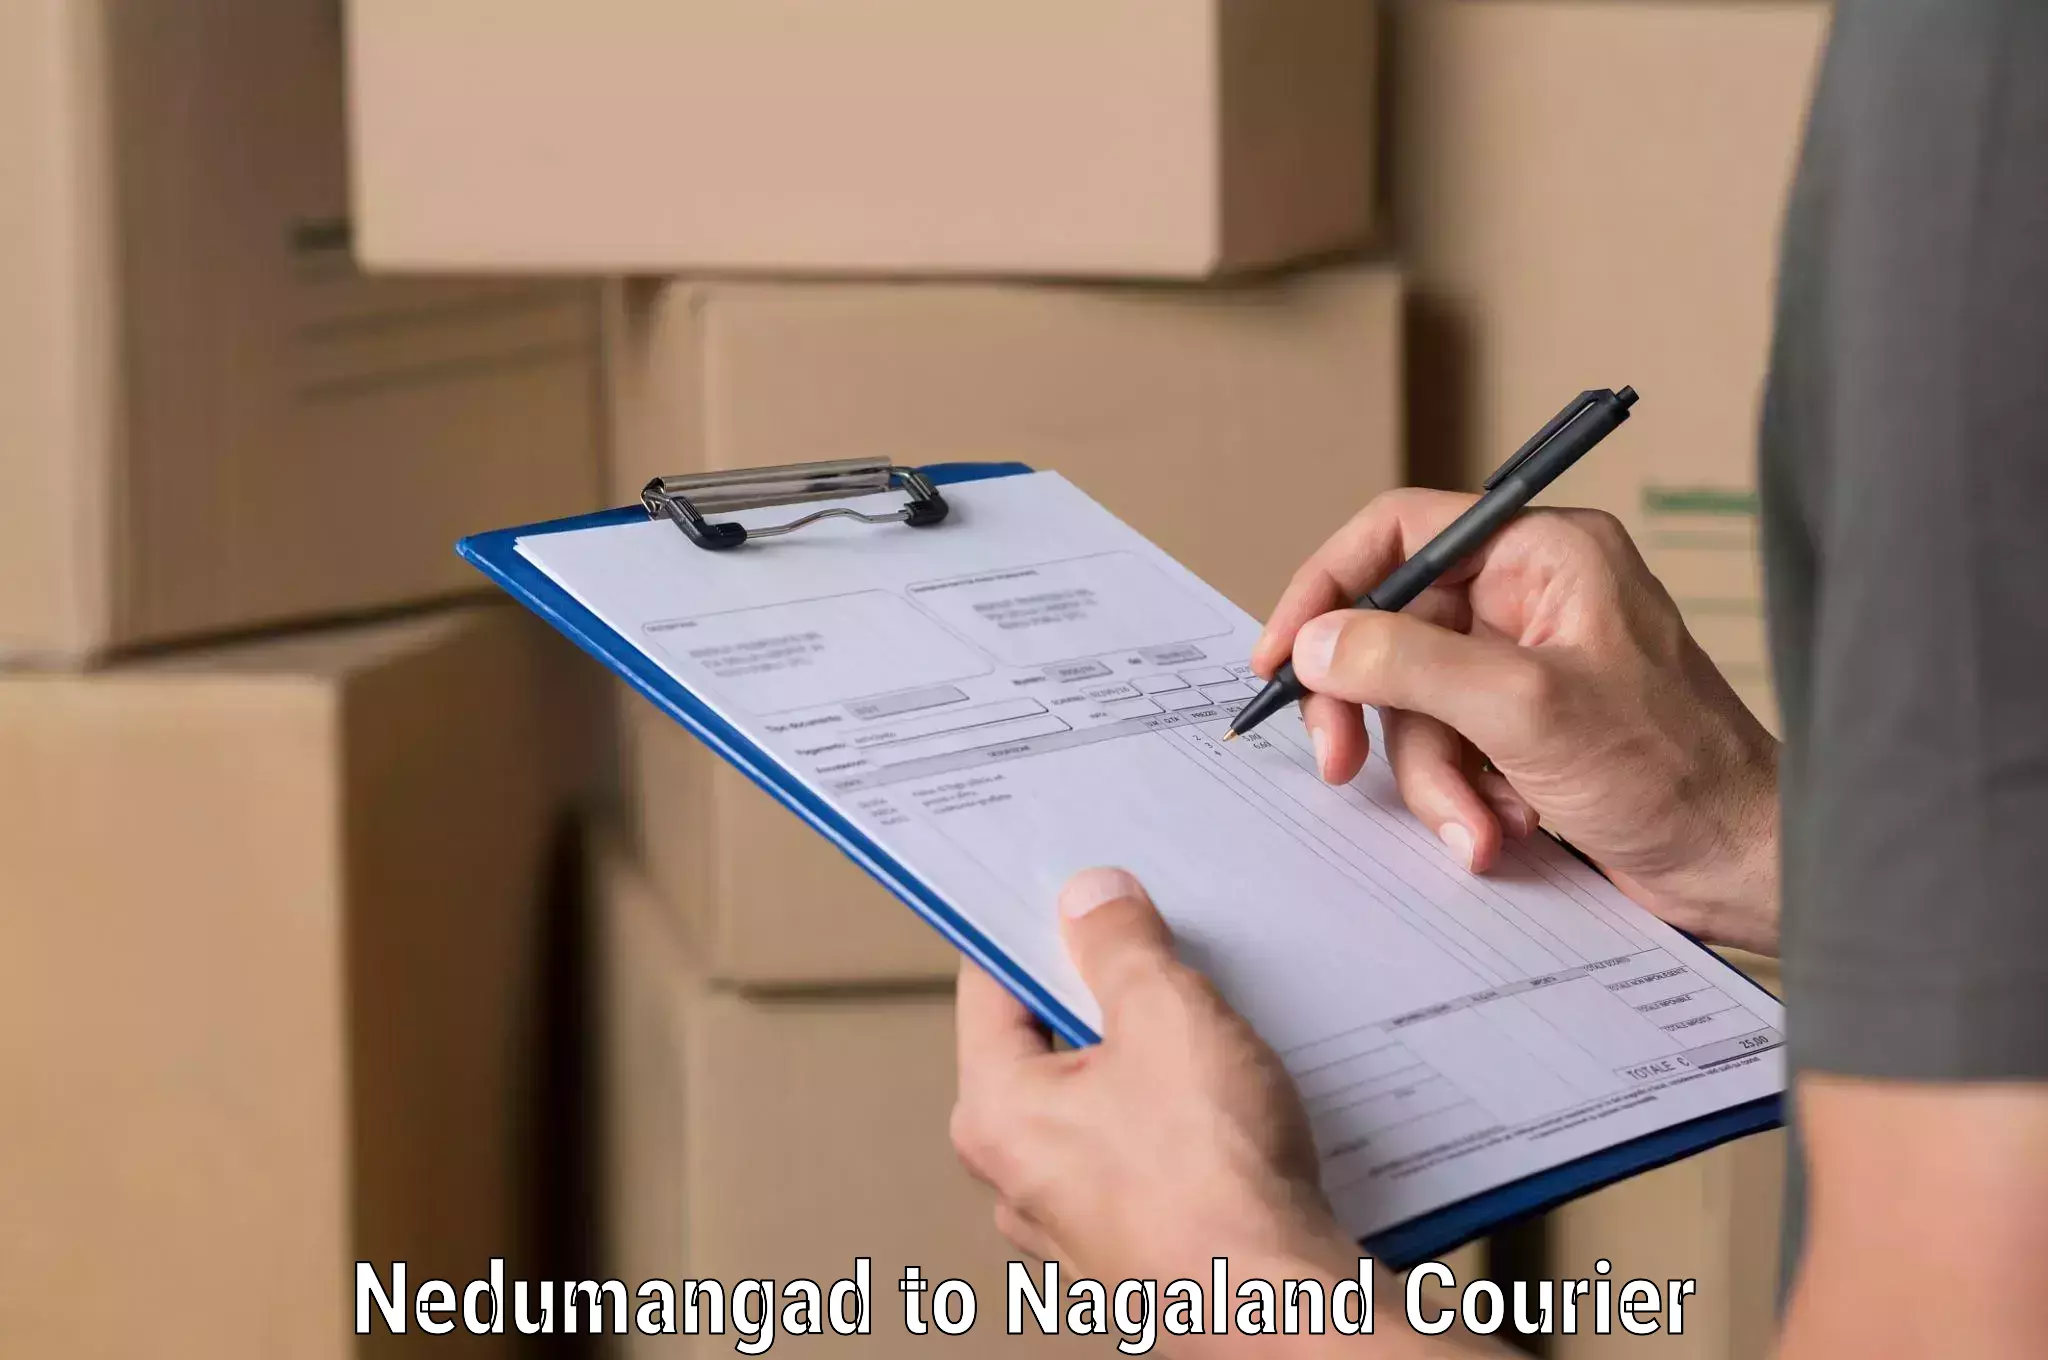 Courier service innovation Nedumangad to Nagaland